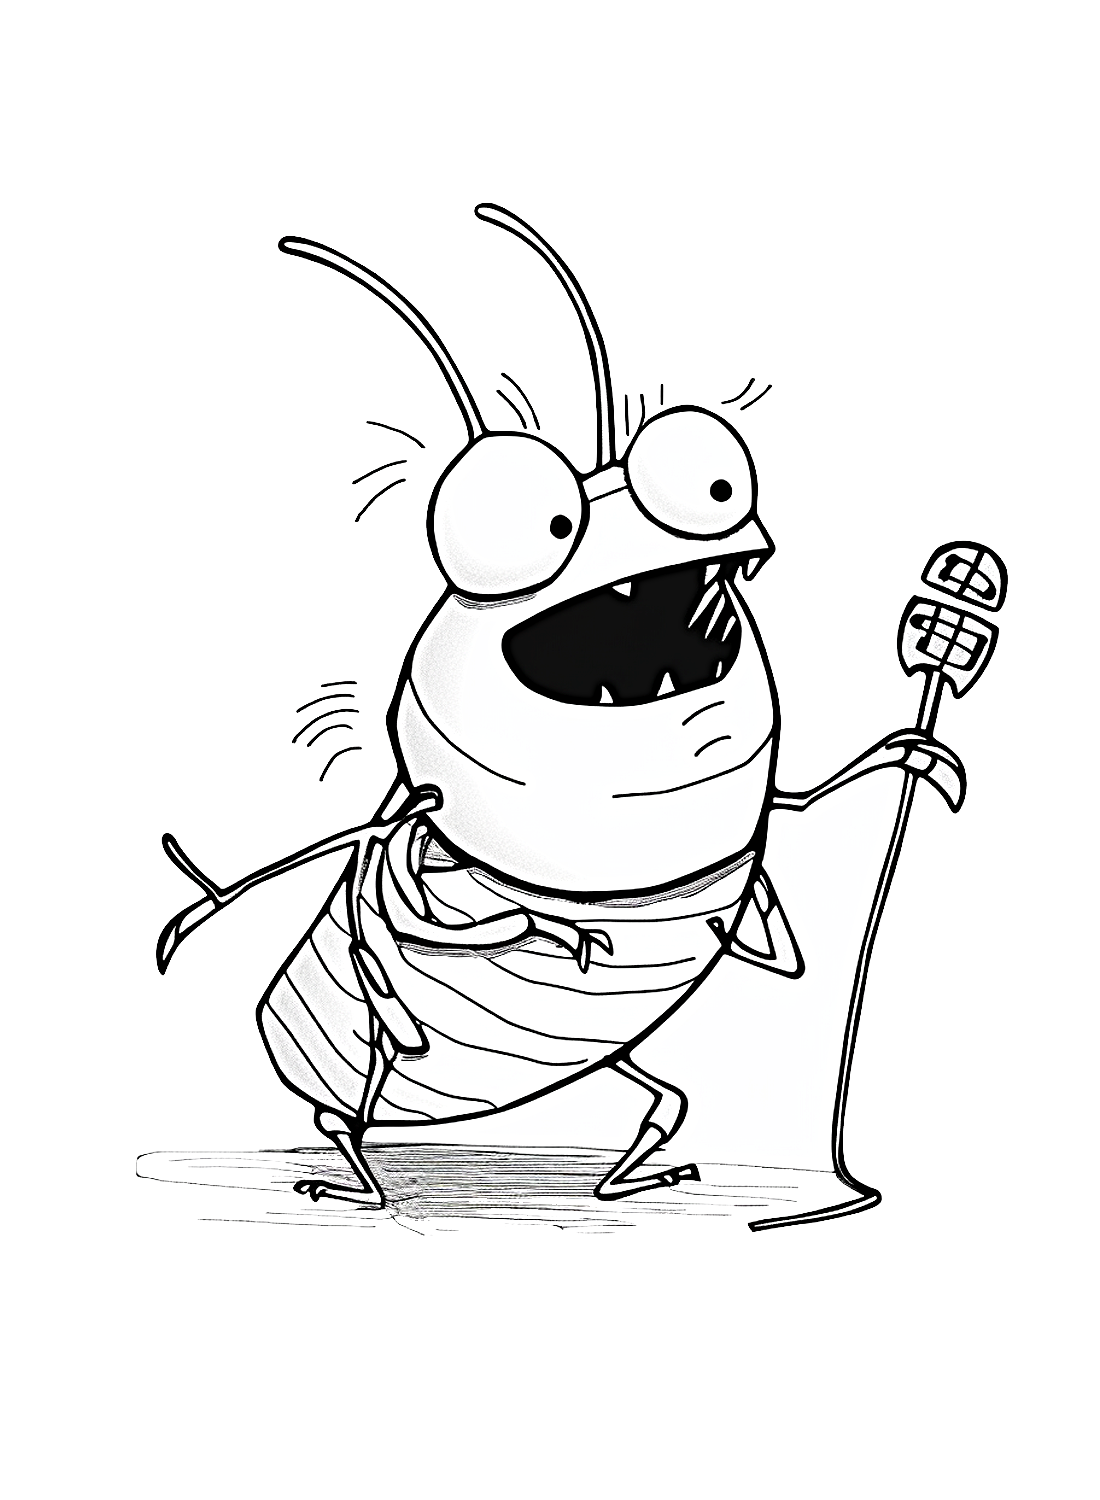 Kakkerlak zingt uit Kakkerlak